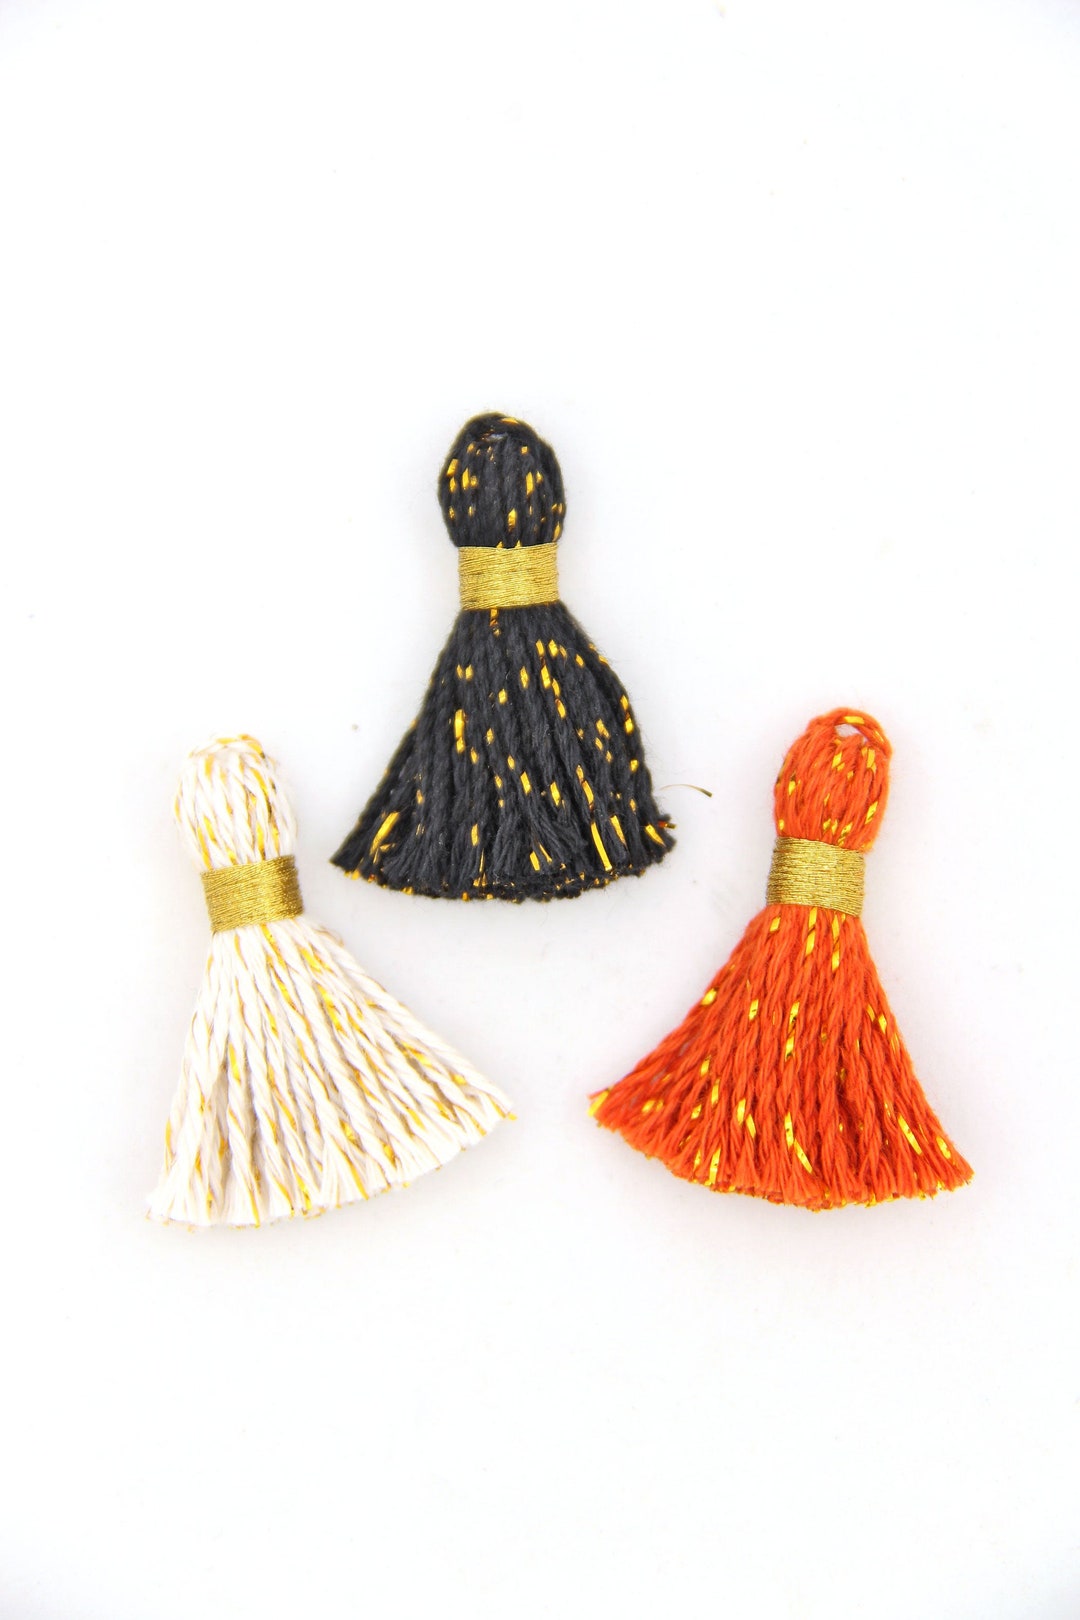 Mini Cotton & Sparkly Tinsel Tassels, GOLD Binding, 1.25 Fringe Pendant,  DIY Jewelry Making, Handmade in India 